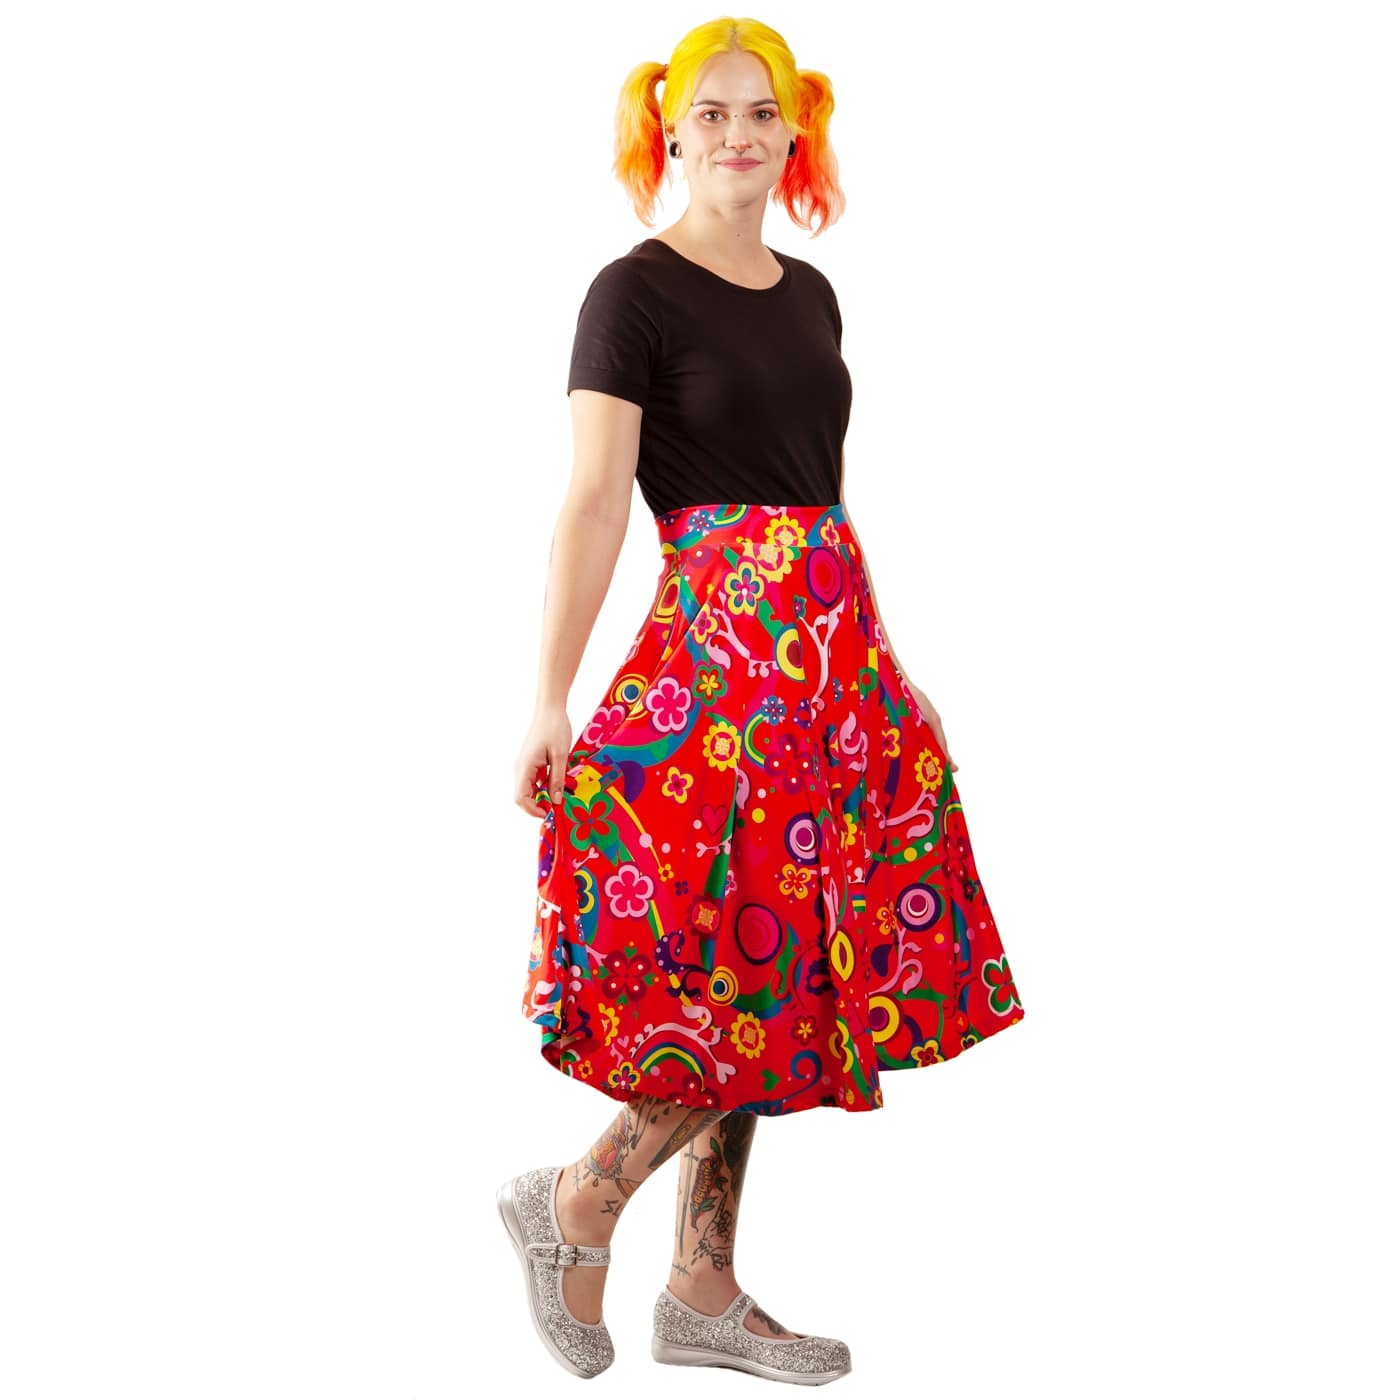 Groovy Remix Swishy Skirt by RainbowsAndFairies.com.au (Woodstock - Psychedelic - Hippy - Circle Skirt With Pockets - Mod Retro) - SKU: CL_SWISH_GROOV_REM - Pic-06